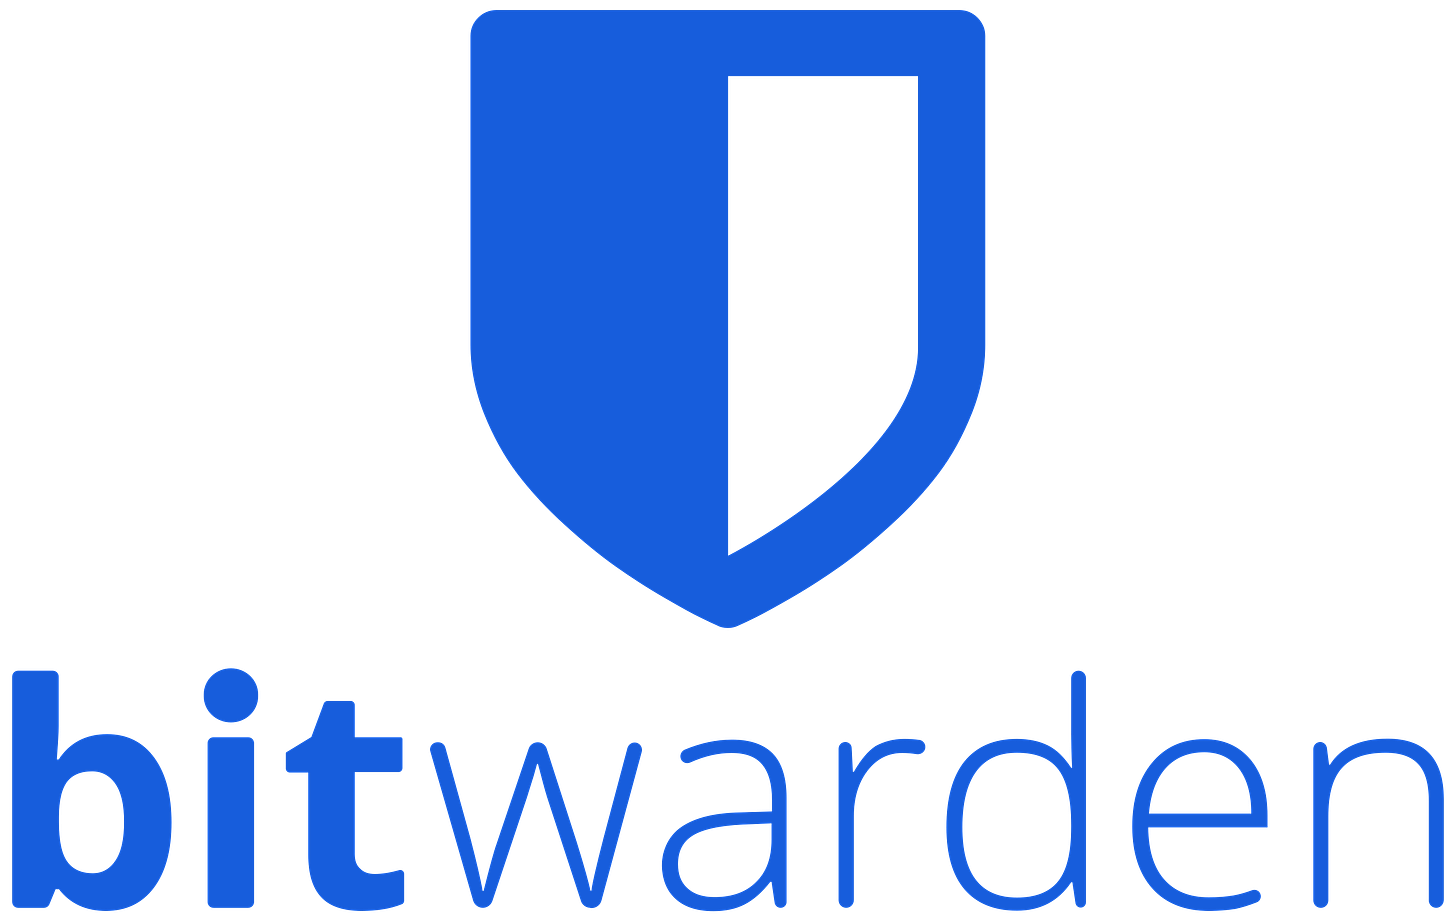 File:Bitwarden logo.svg - Wikipedia